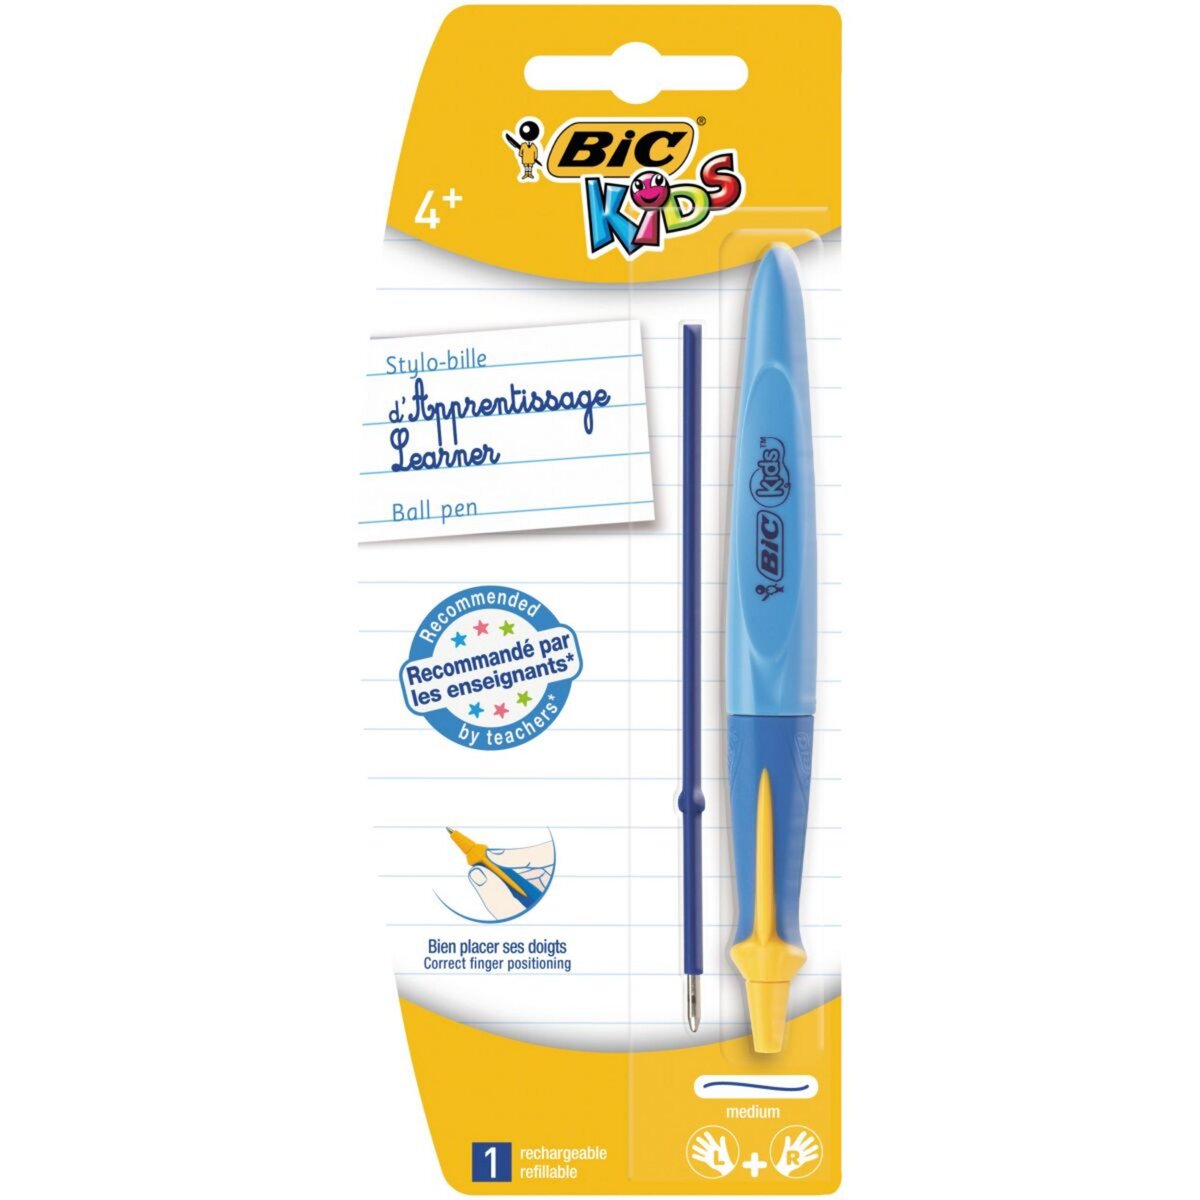 BIC Stylo bille d'apprentissage pointe moyenne Kids Twist bleu + 1 recharge